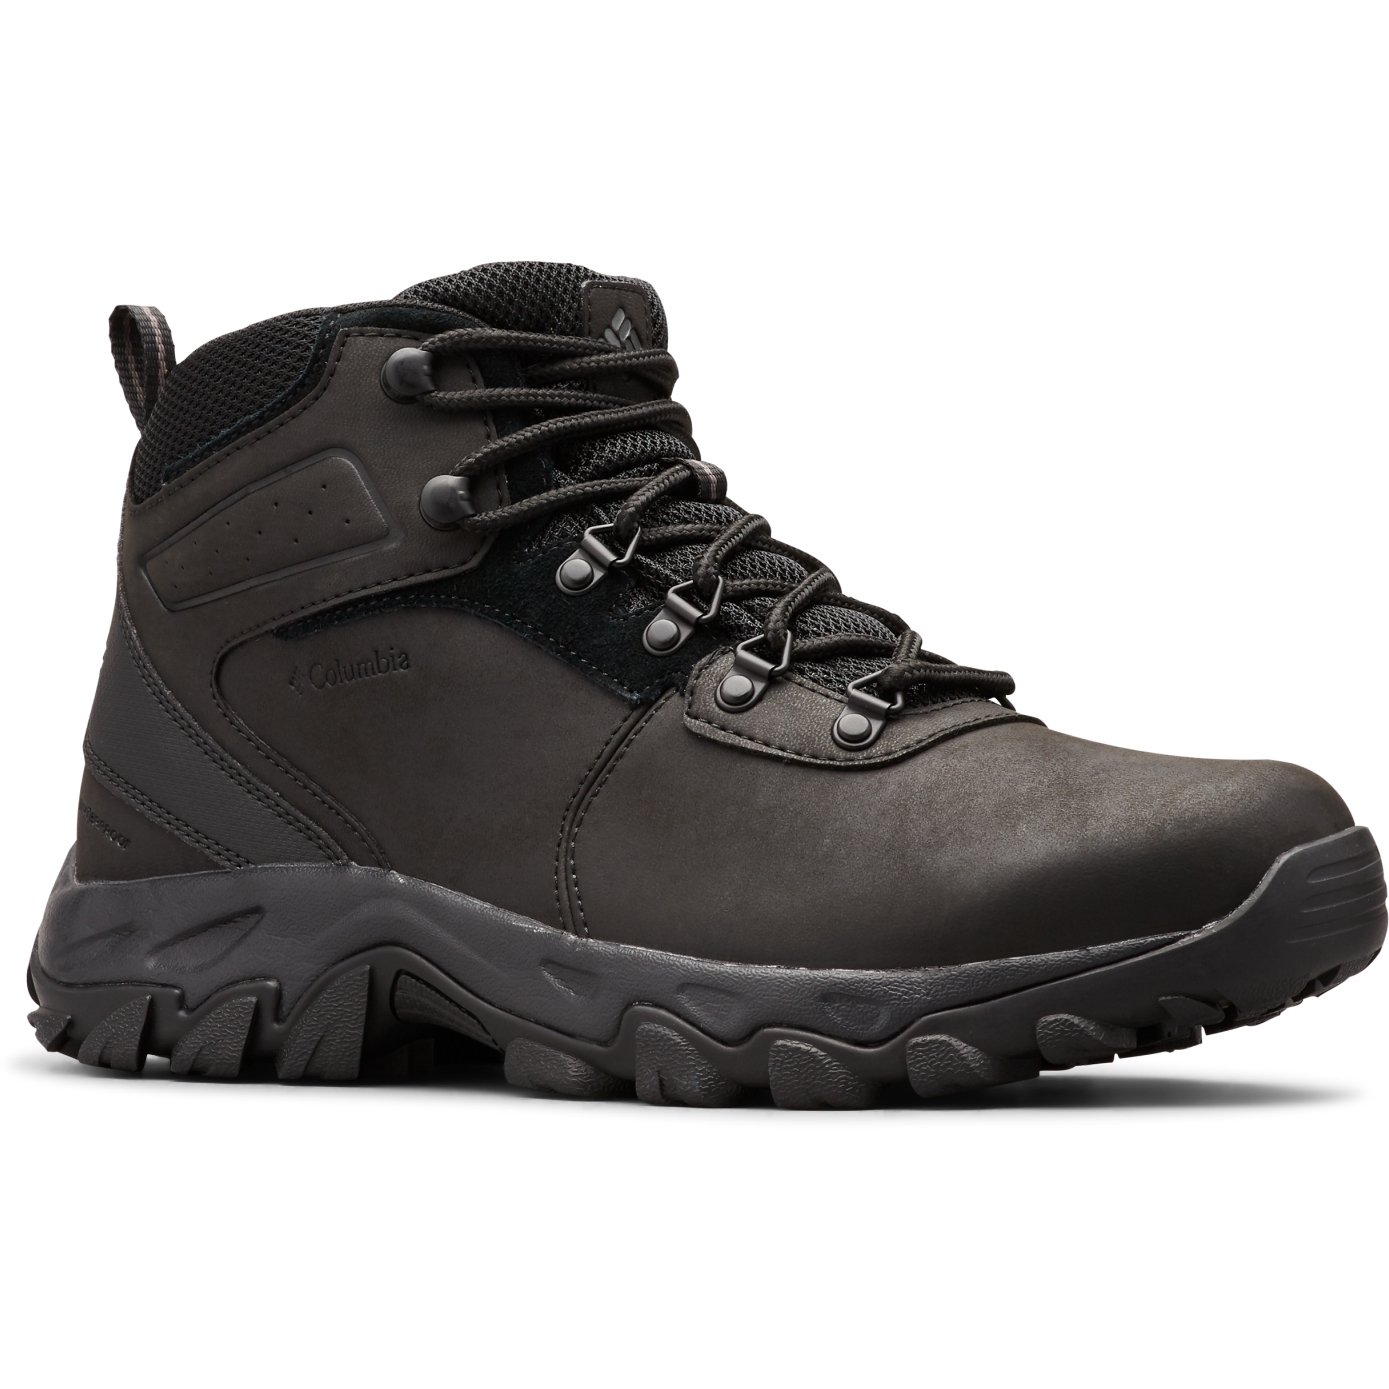 Picture of Columbia Newton Ridge Plus II Waterproof Hiking Shoes - Black/Black